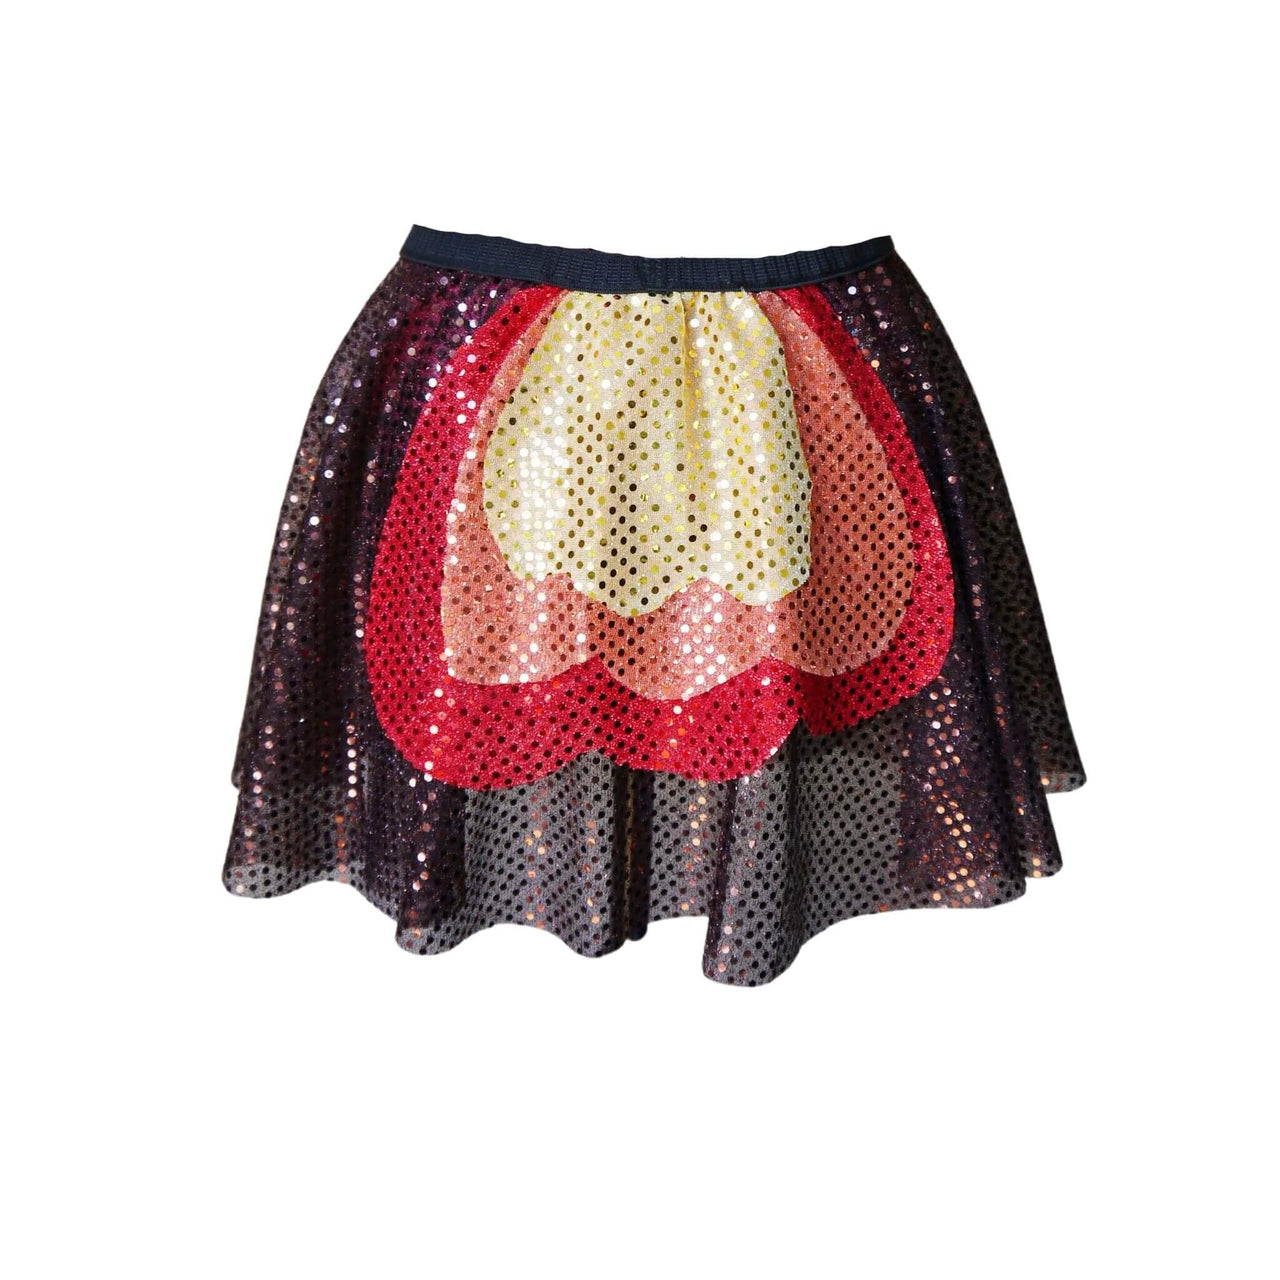 Turkey Trot Sparkle Running Skirt